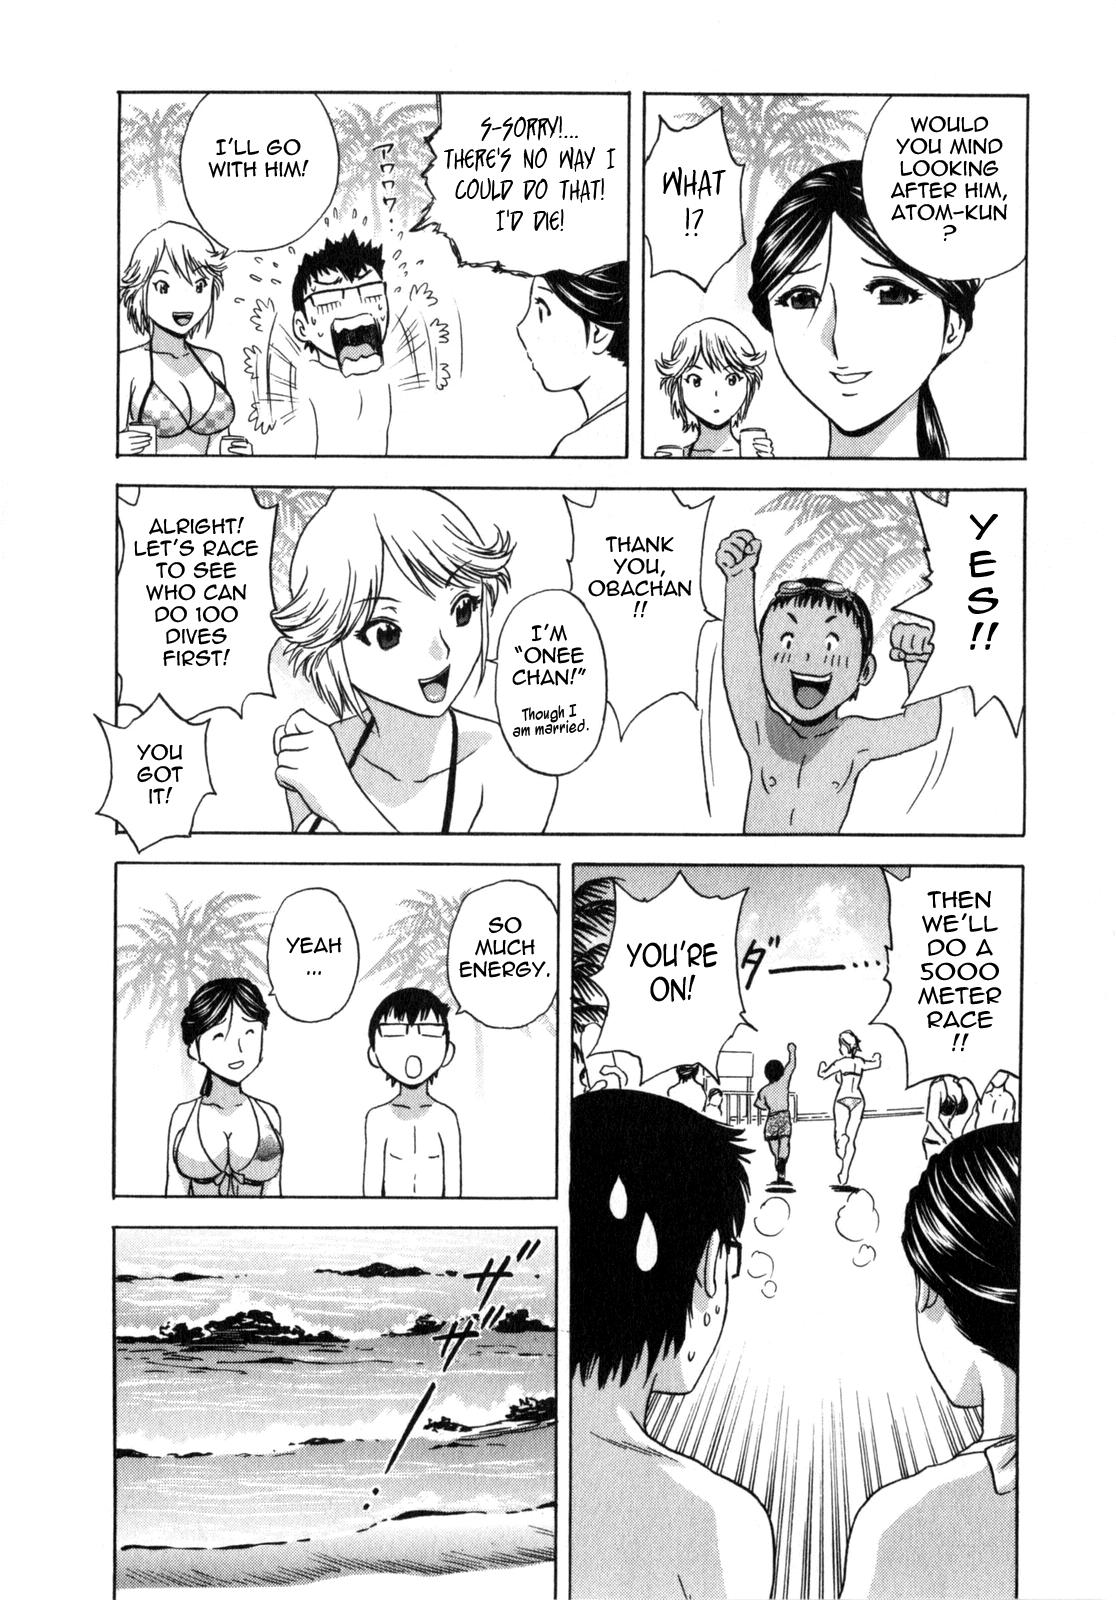 Life with Married Women Just Like a Manga 1 122